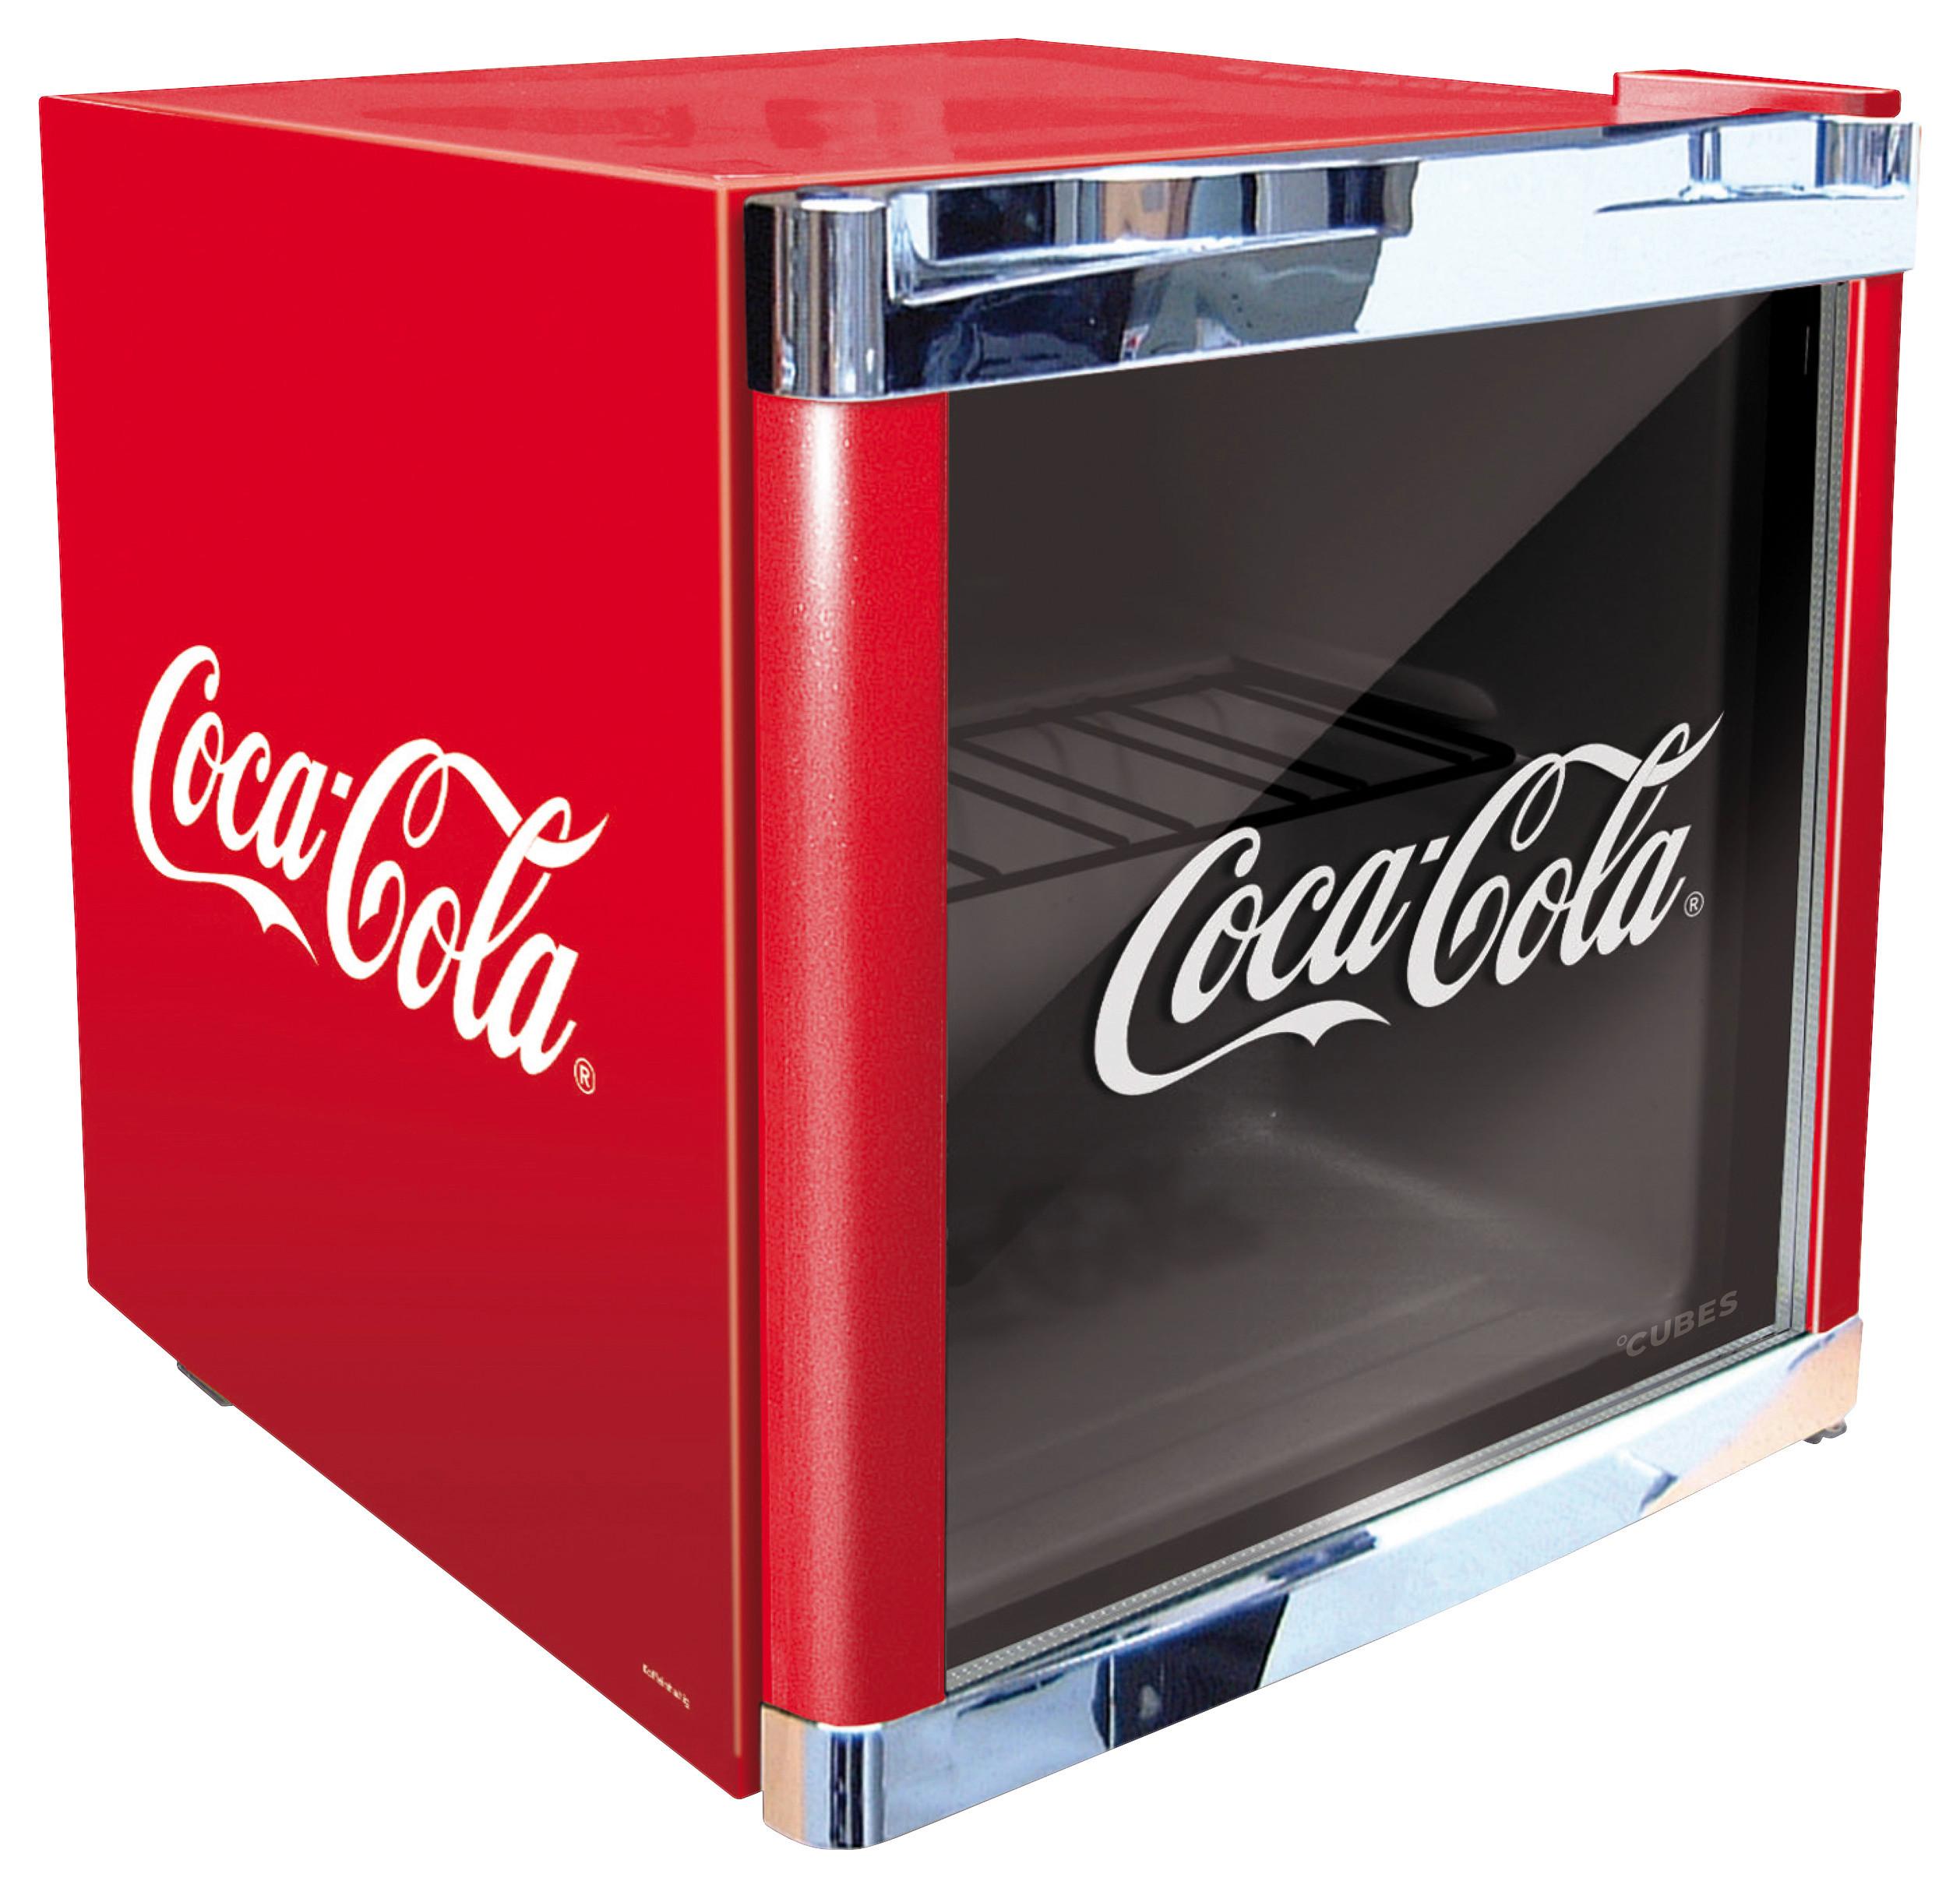 Kühlschrank Cool Cube 48l in Rot - Rot, Basics, Metall (51/43/47,5cm) - Atrigo